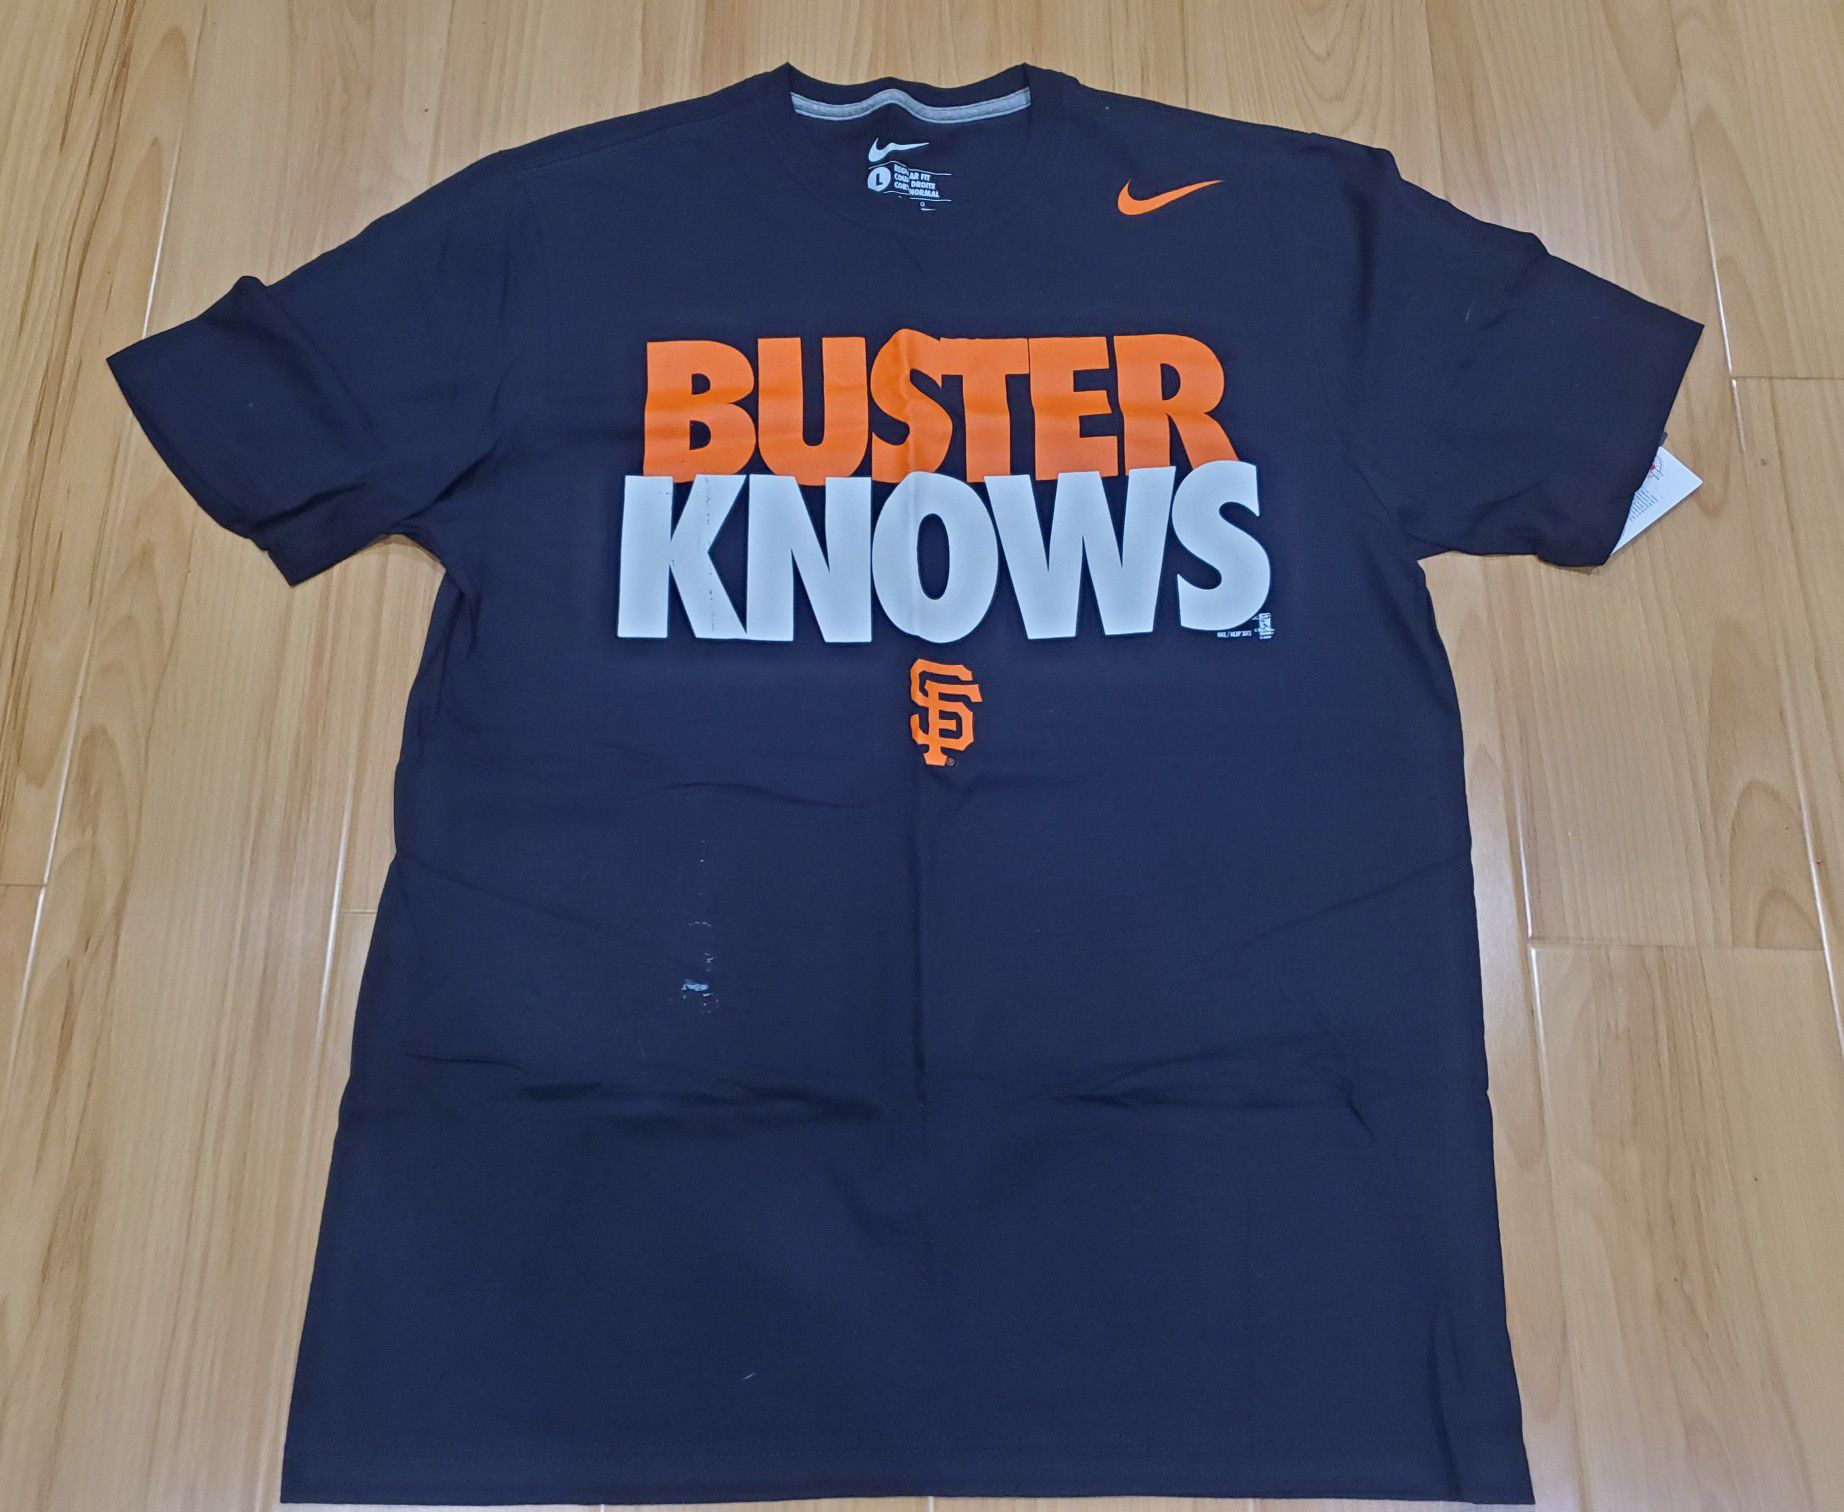 Vintage VTG Nike San Francisco SF Giants "Buster Knows" Tee Shirt size Large Tee supreme kaws kith staple